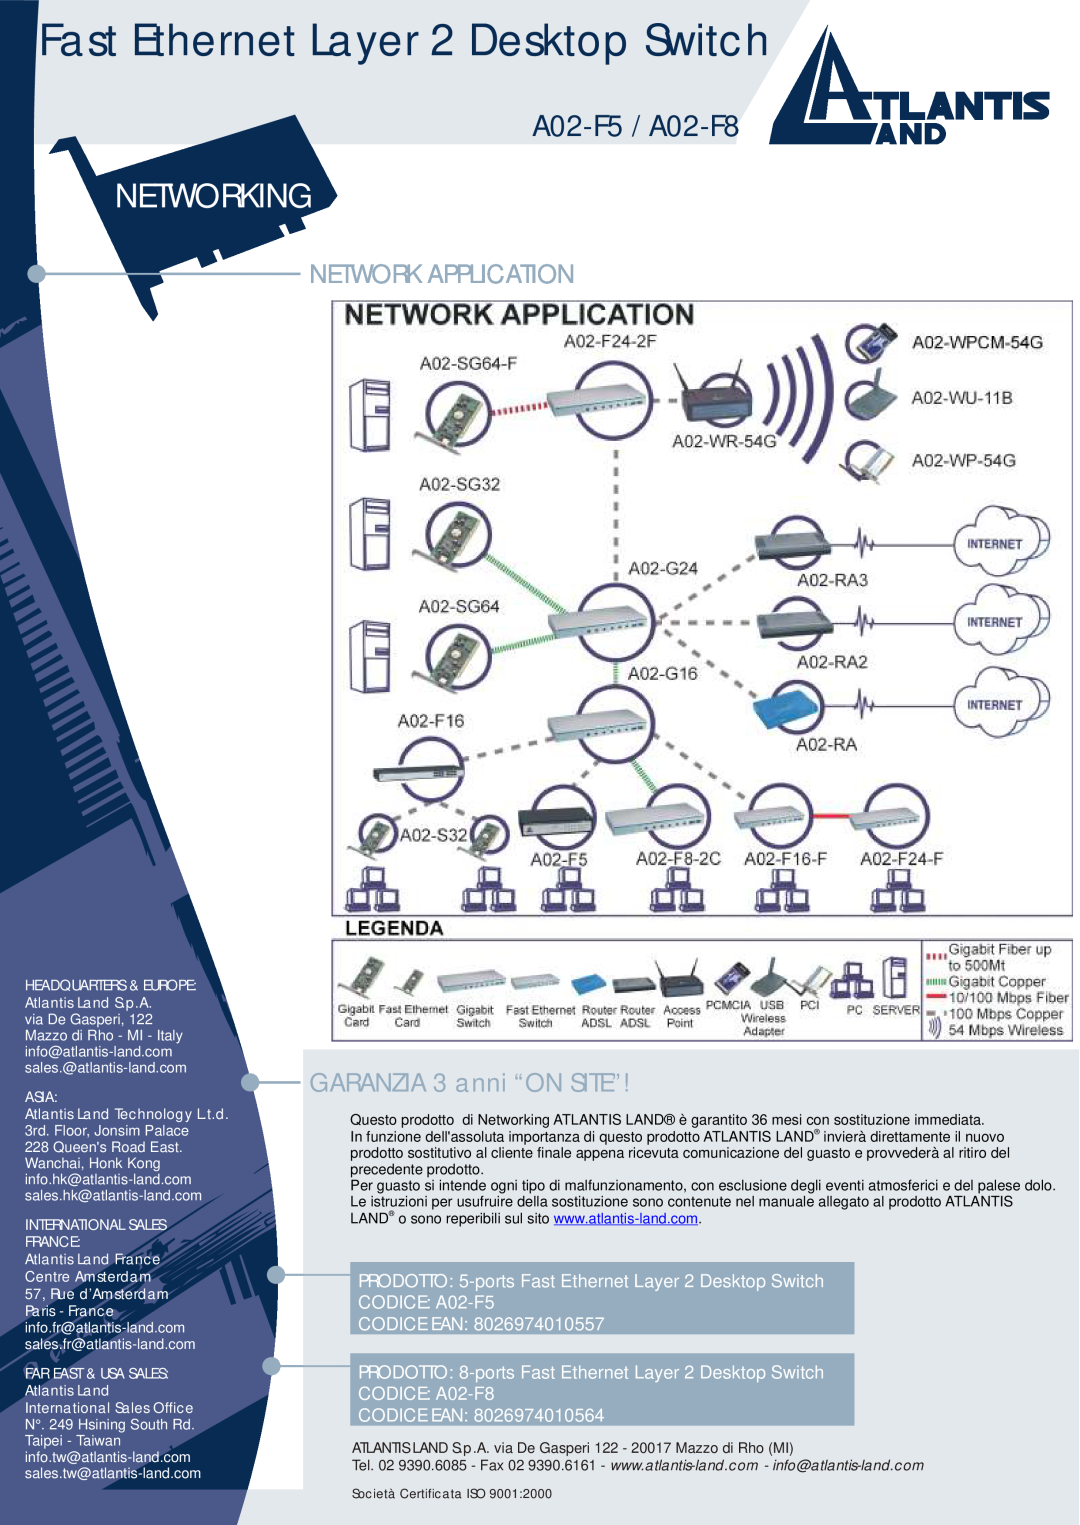 Atlantis Land A02-F5 Network Application, GARANZIA 3 anni “ON SITE”, Fast Ethernet Layer 2 Desktop Switch, Networking 